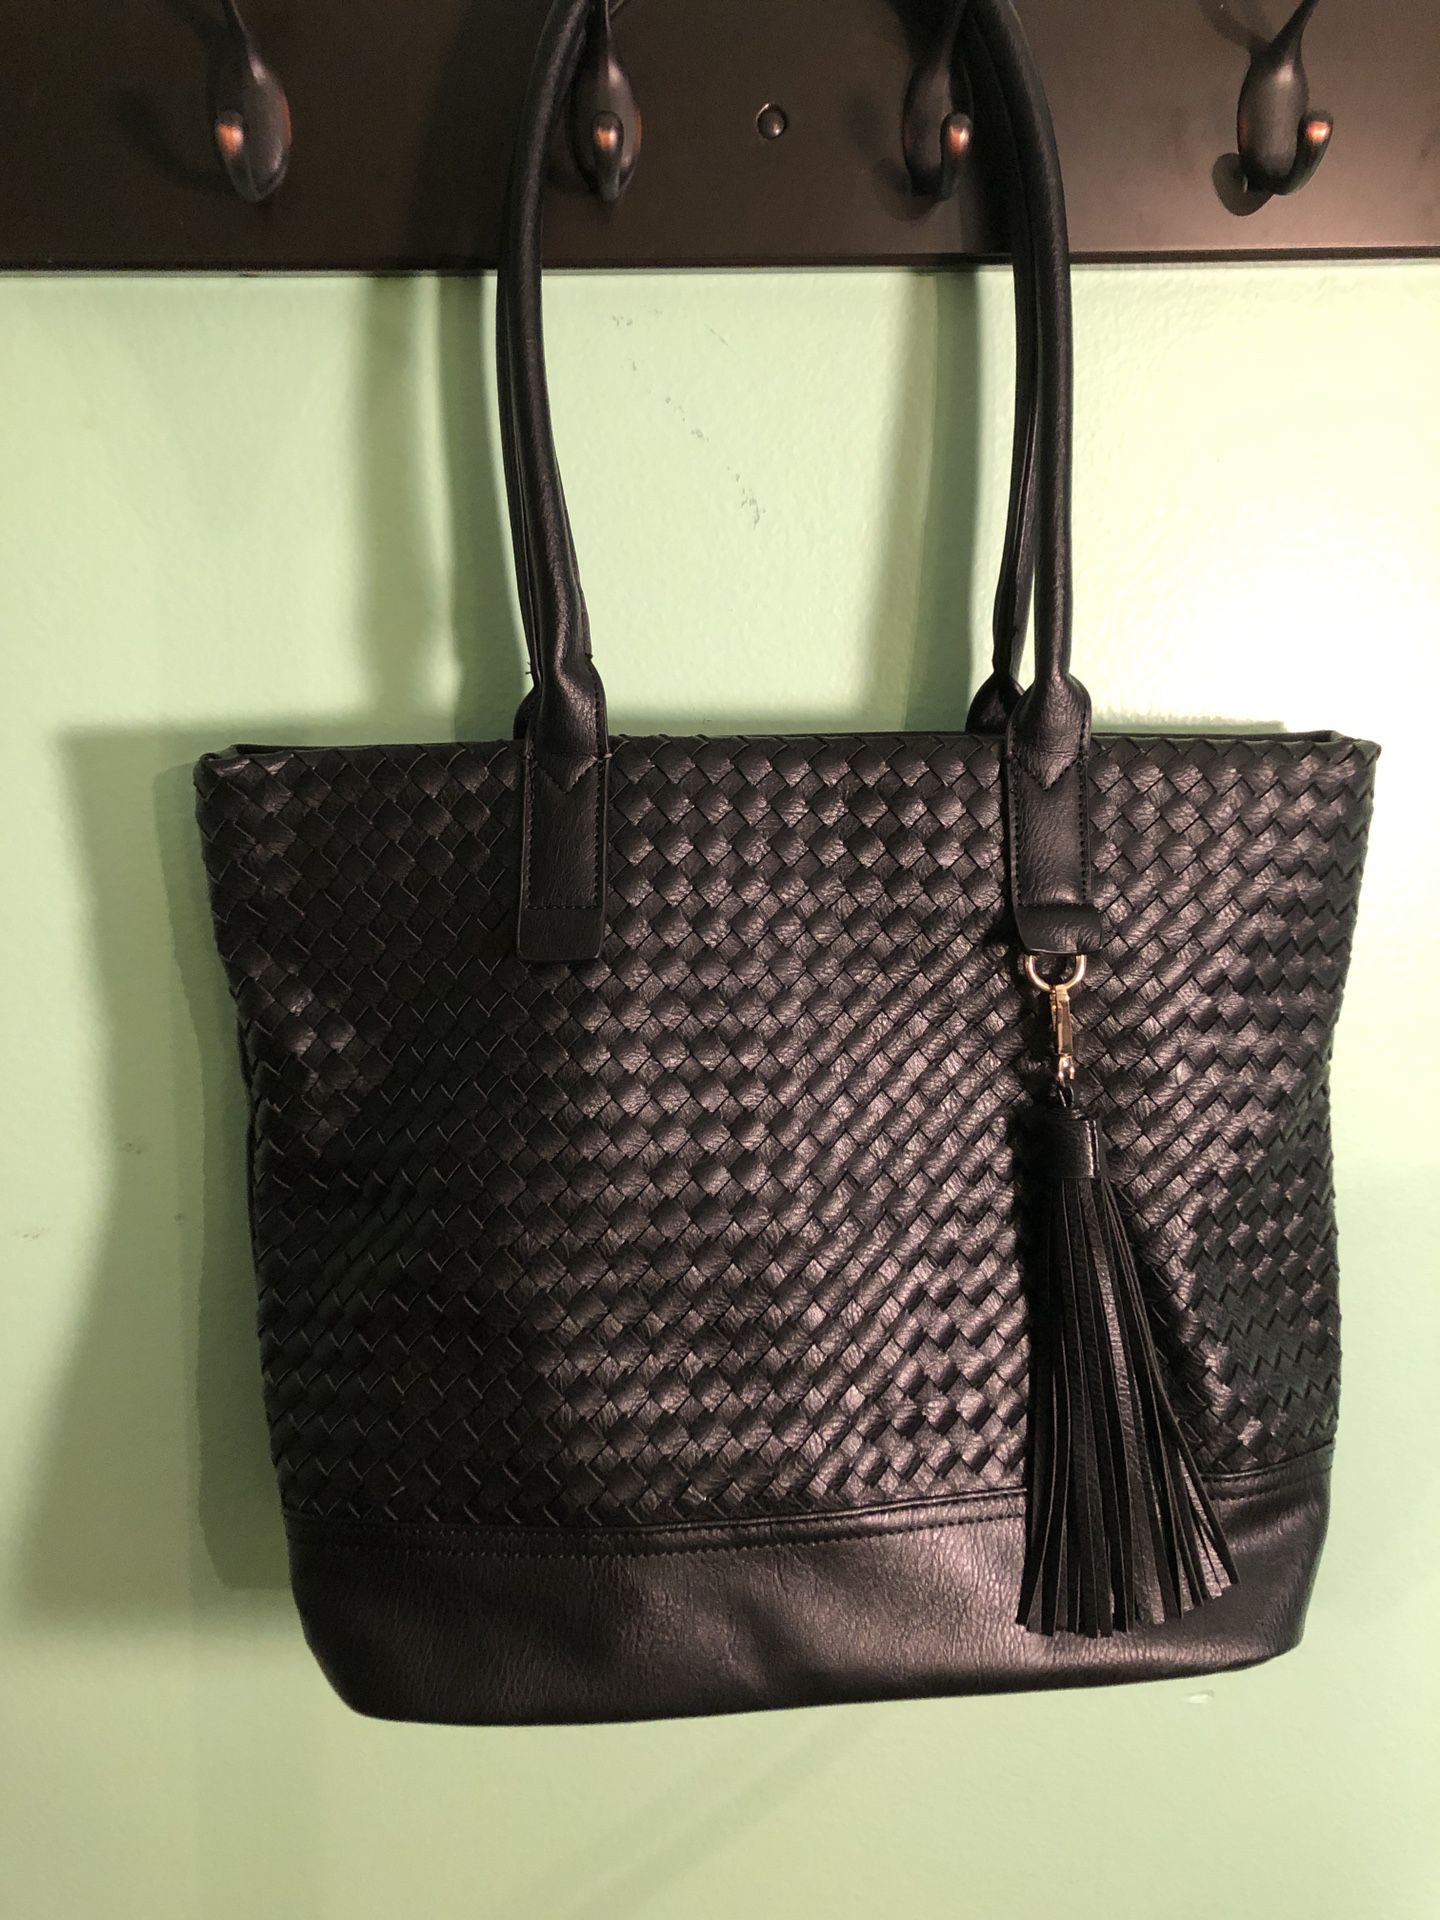 Black women's bag. Leatherette material. $28